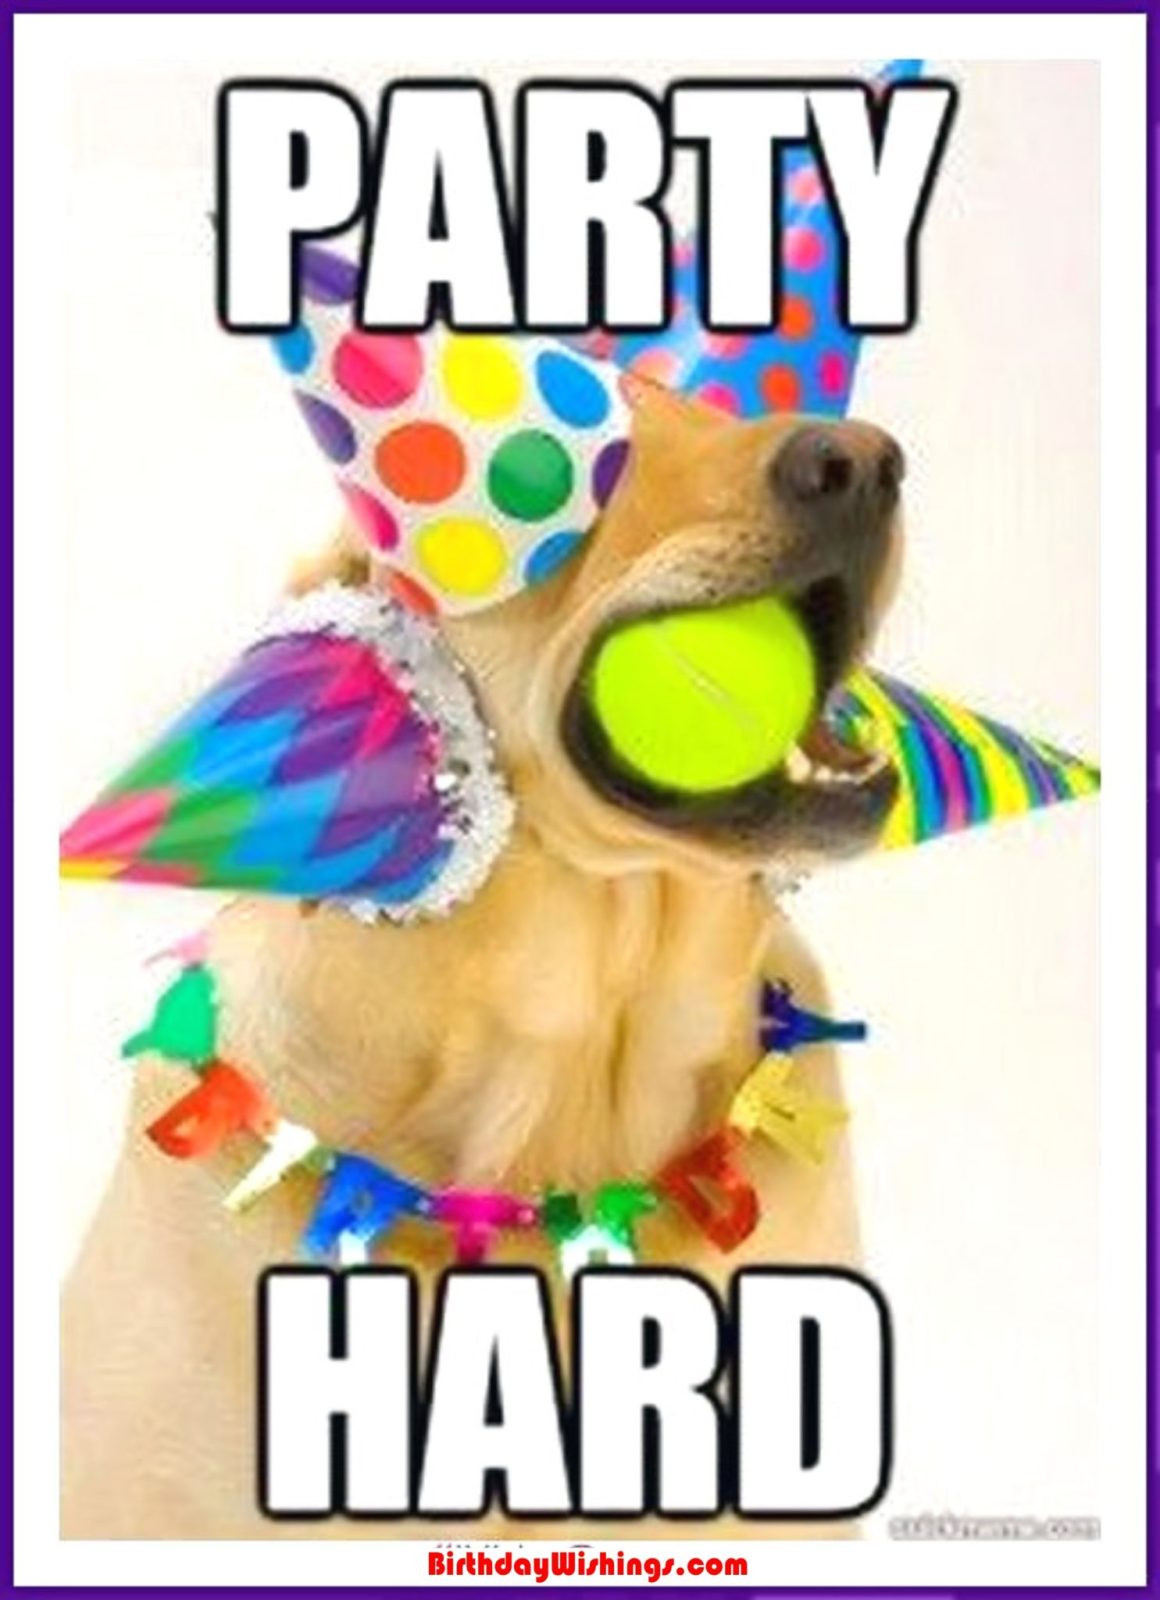 Happy Birthday Funny Meme
 Funny Happy Birthday Memes With cats Dogs & Funny Animals